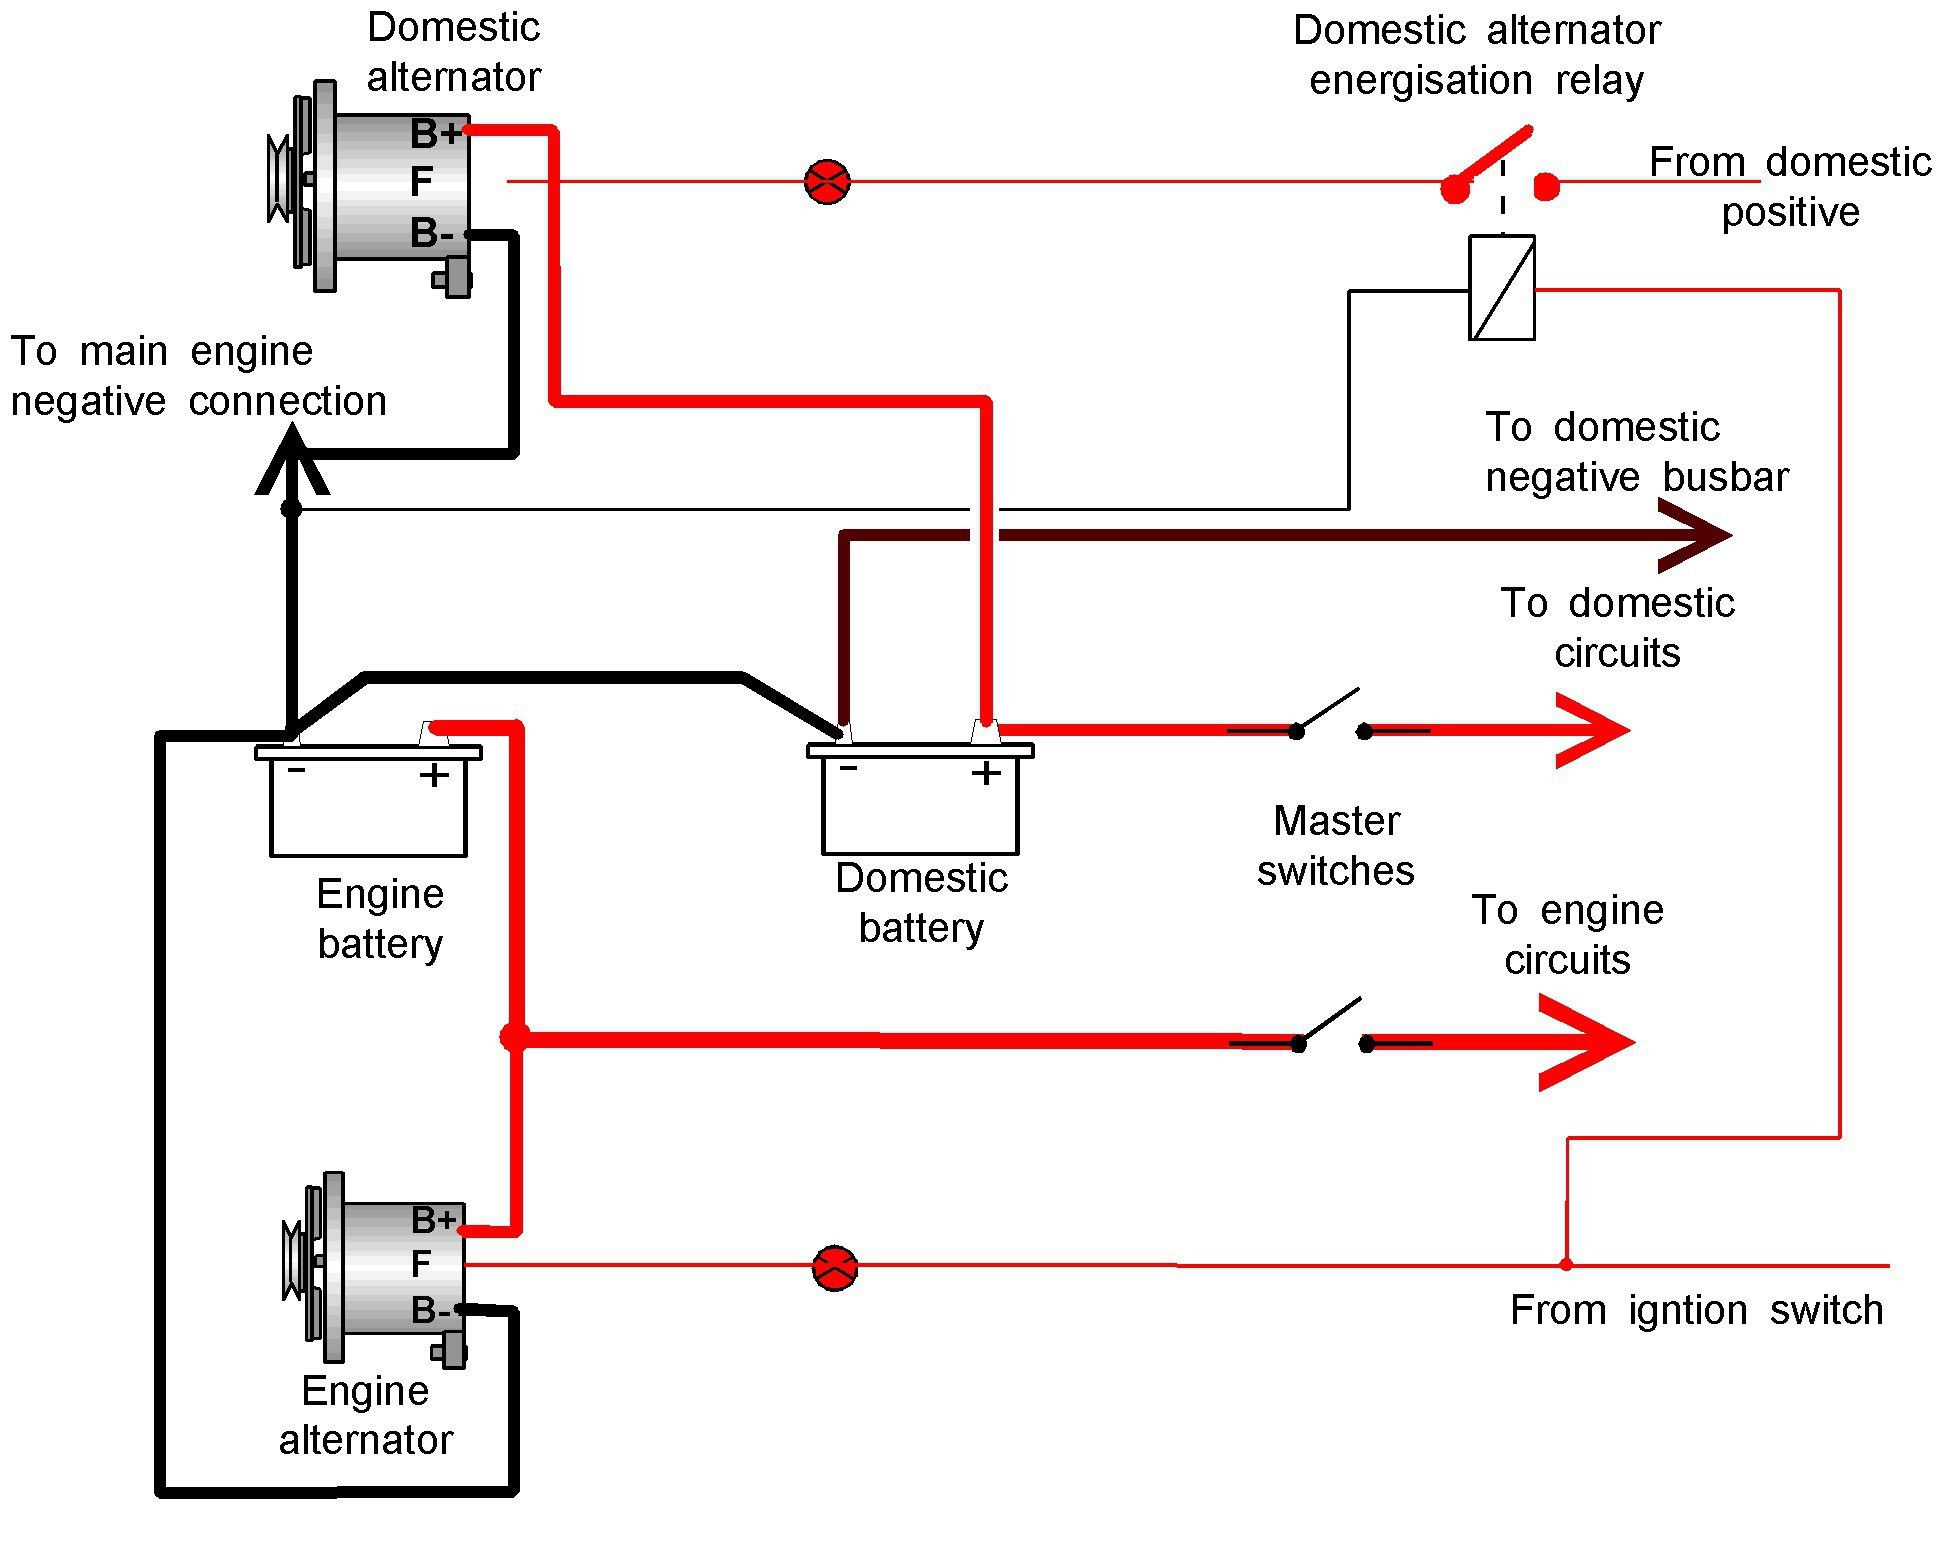 Brush Alternator Wiring Diagram Inspirationa Wiring Diagram For Motorola Alternator Free Download Wiring Diagram